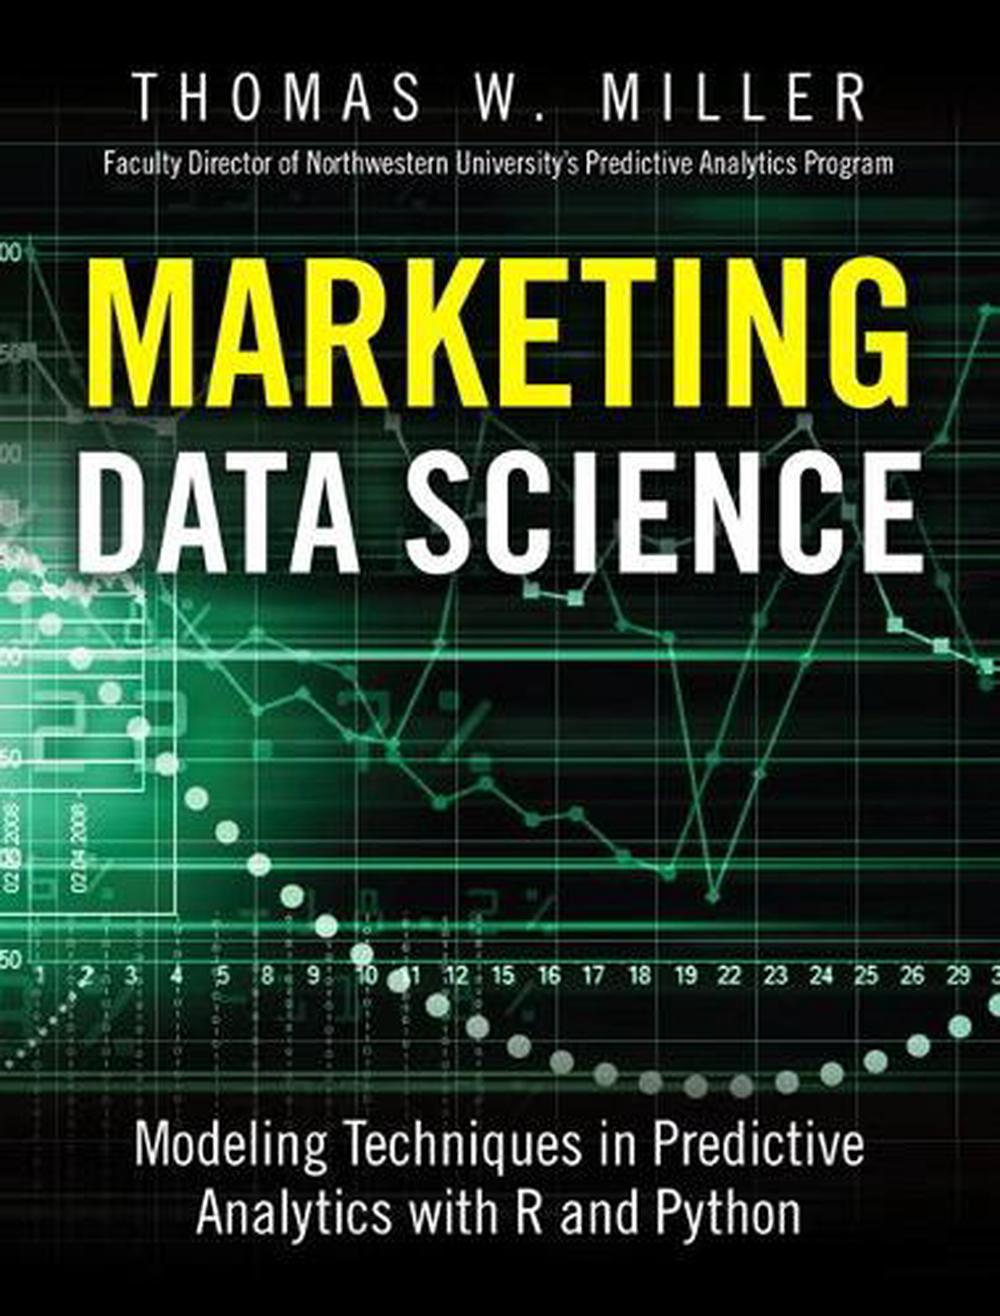 data science marketing case studies